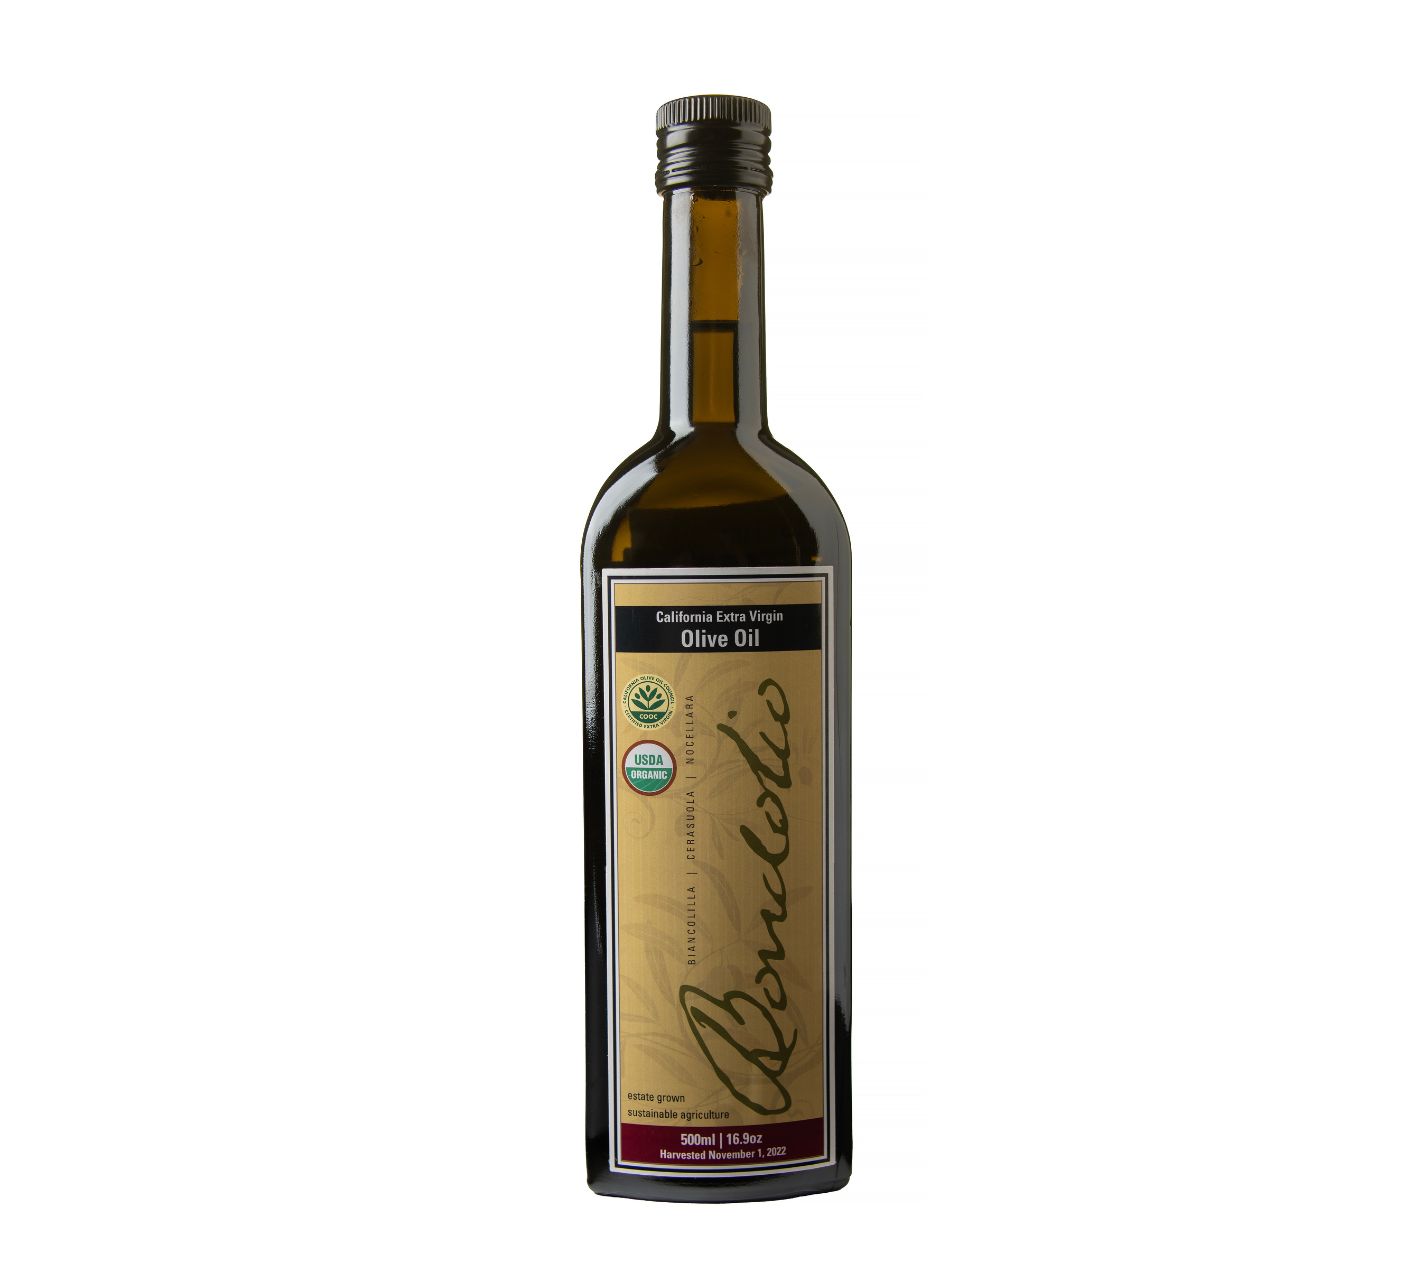 Bondolio olive oil bottle